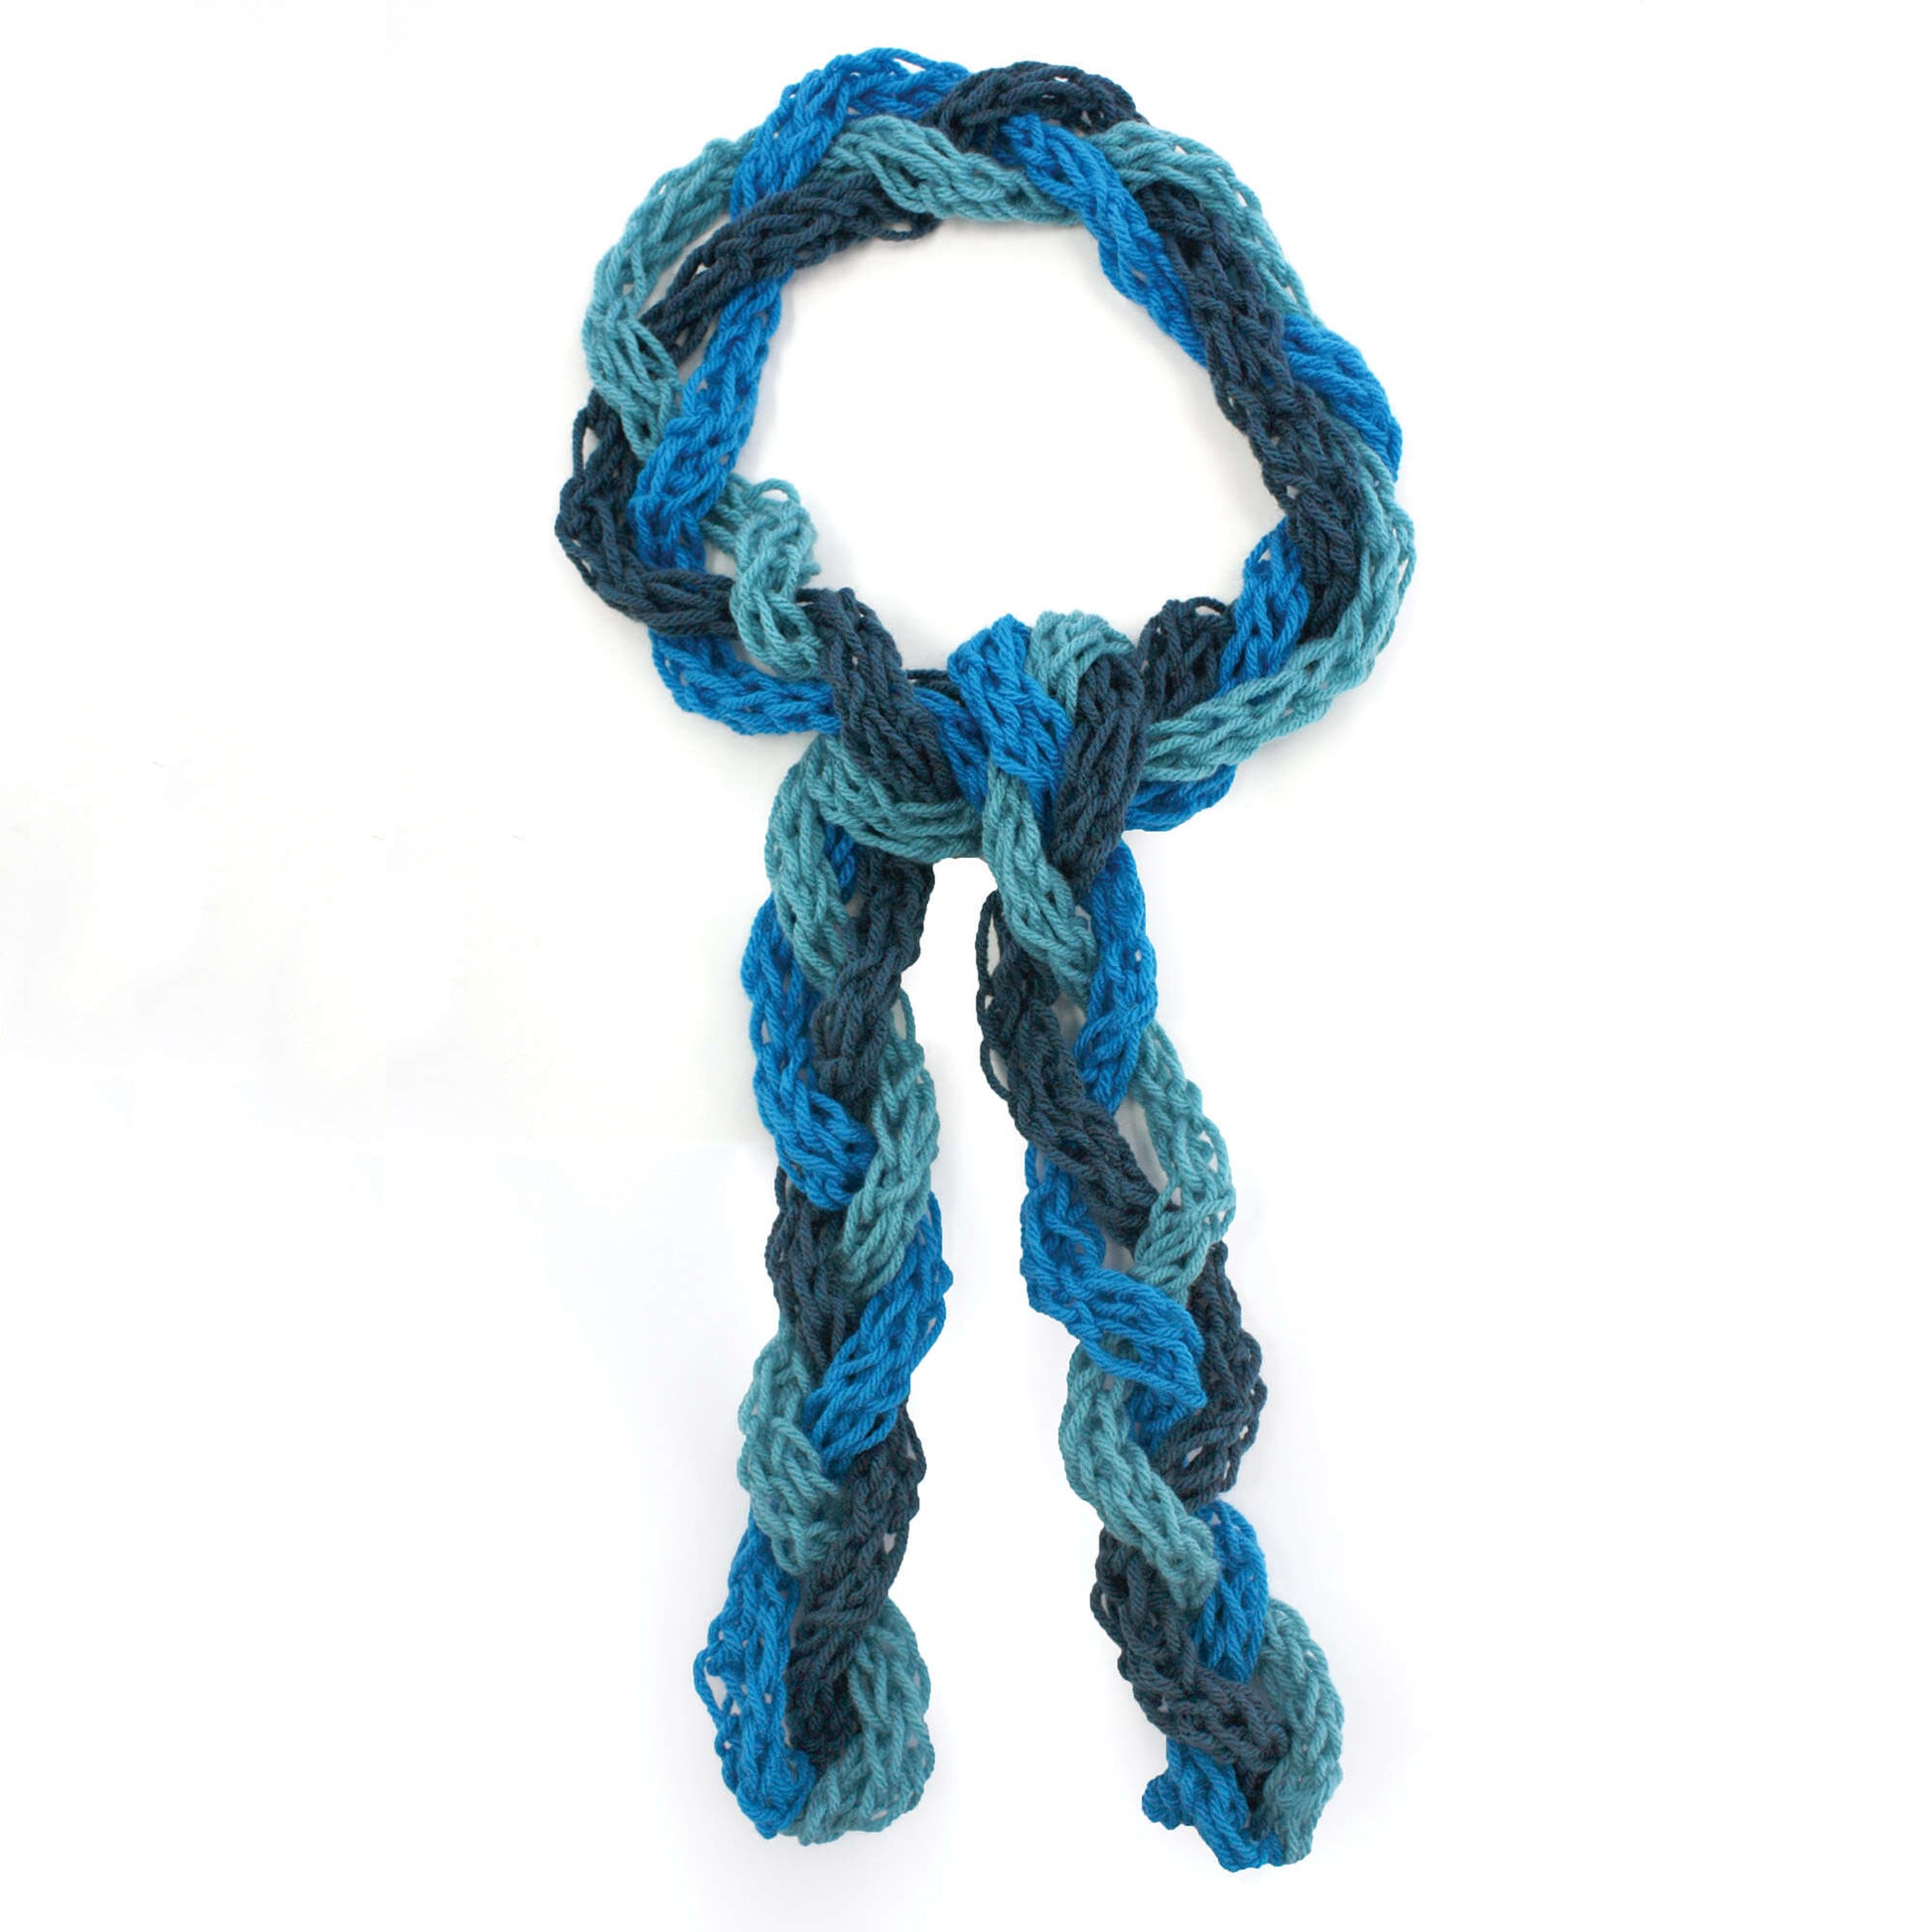 Bernat Finger Knittin' Good Scarf Knit Scarf made in Bernat Super Value yarn